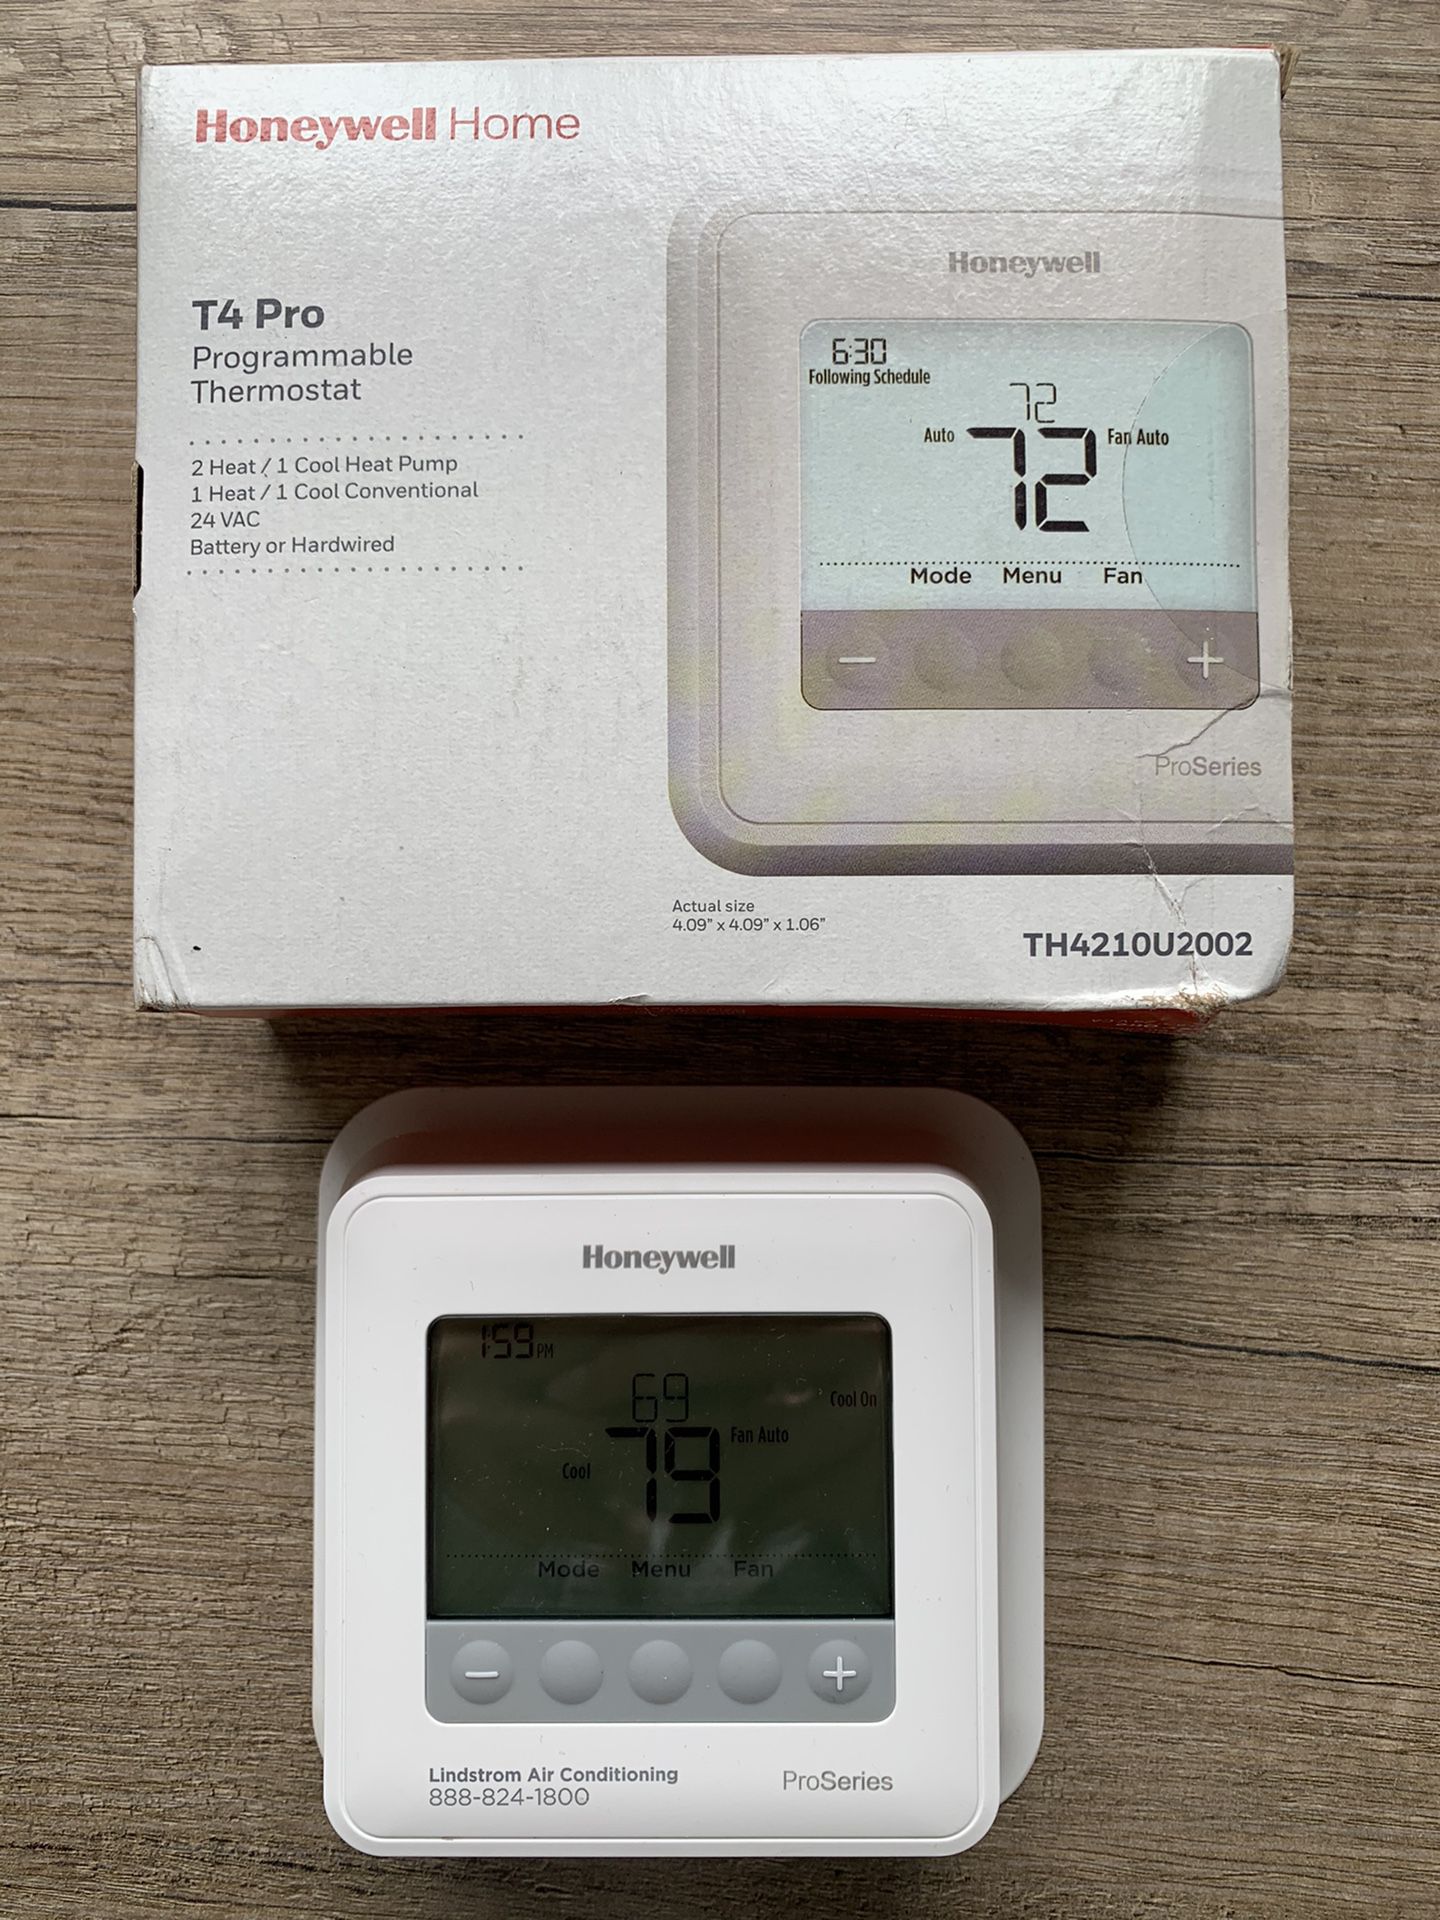 Honeywell Home T4 Pro Digital Thermostat